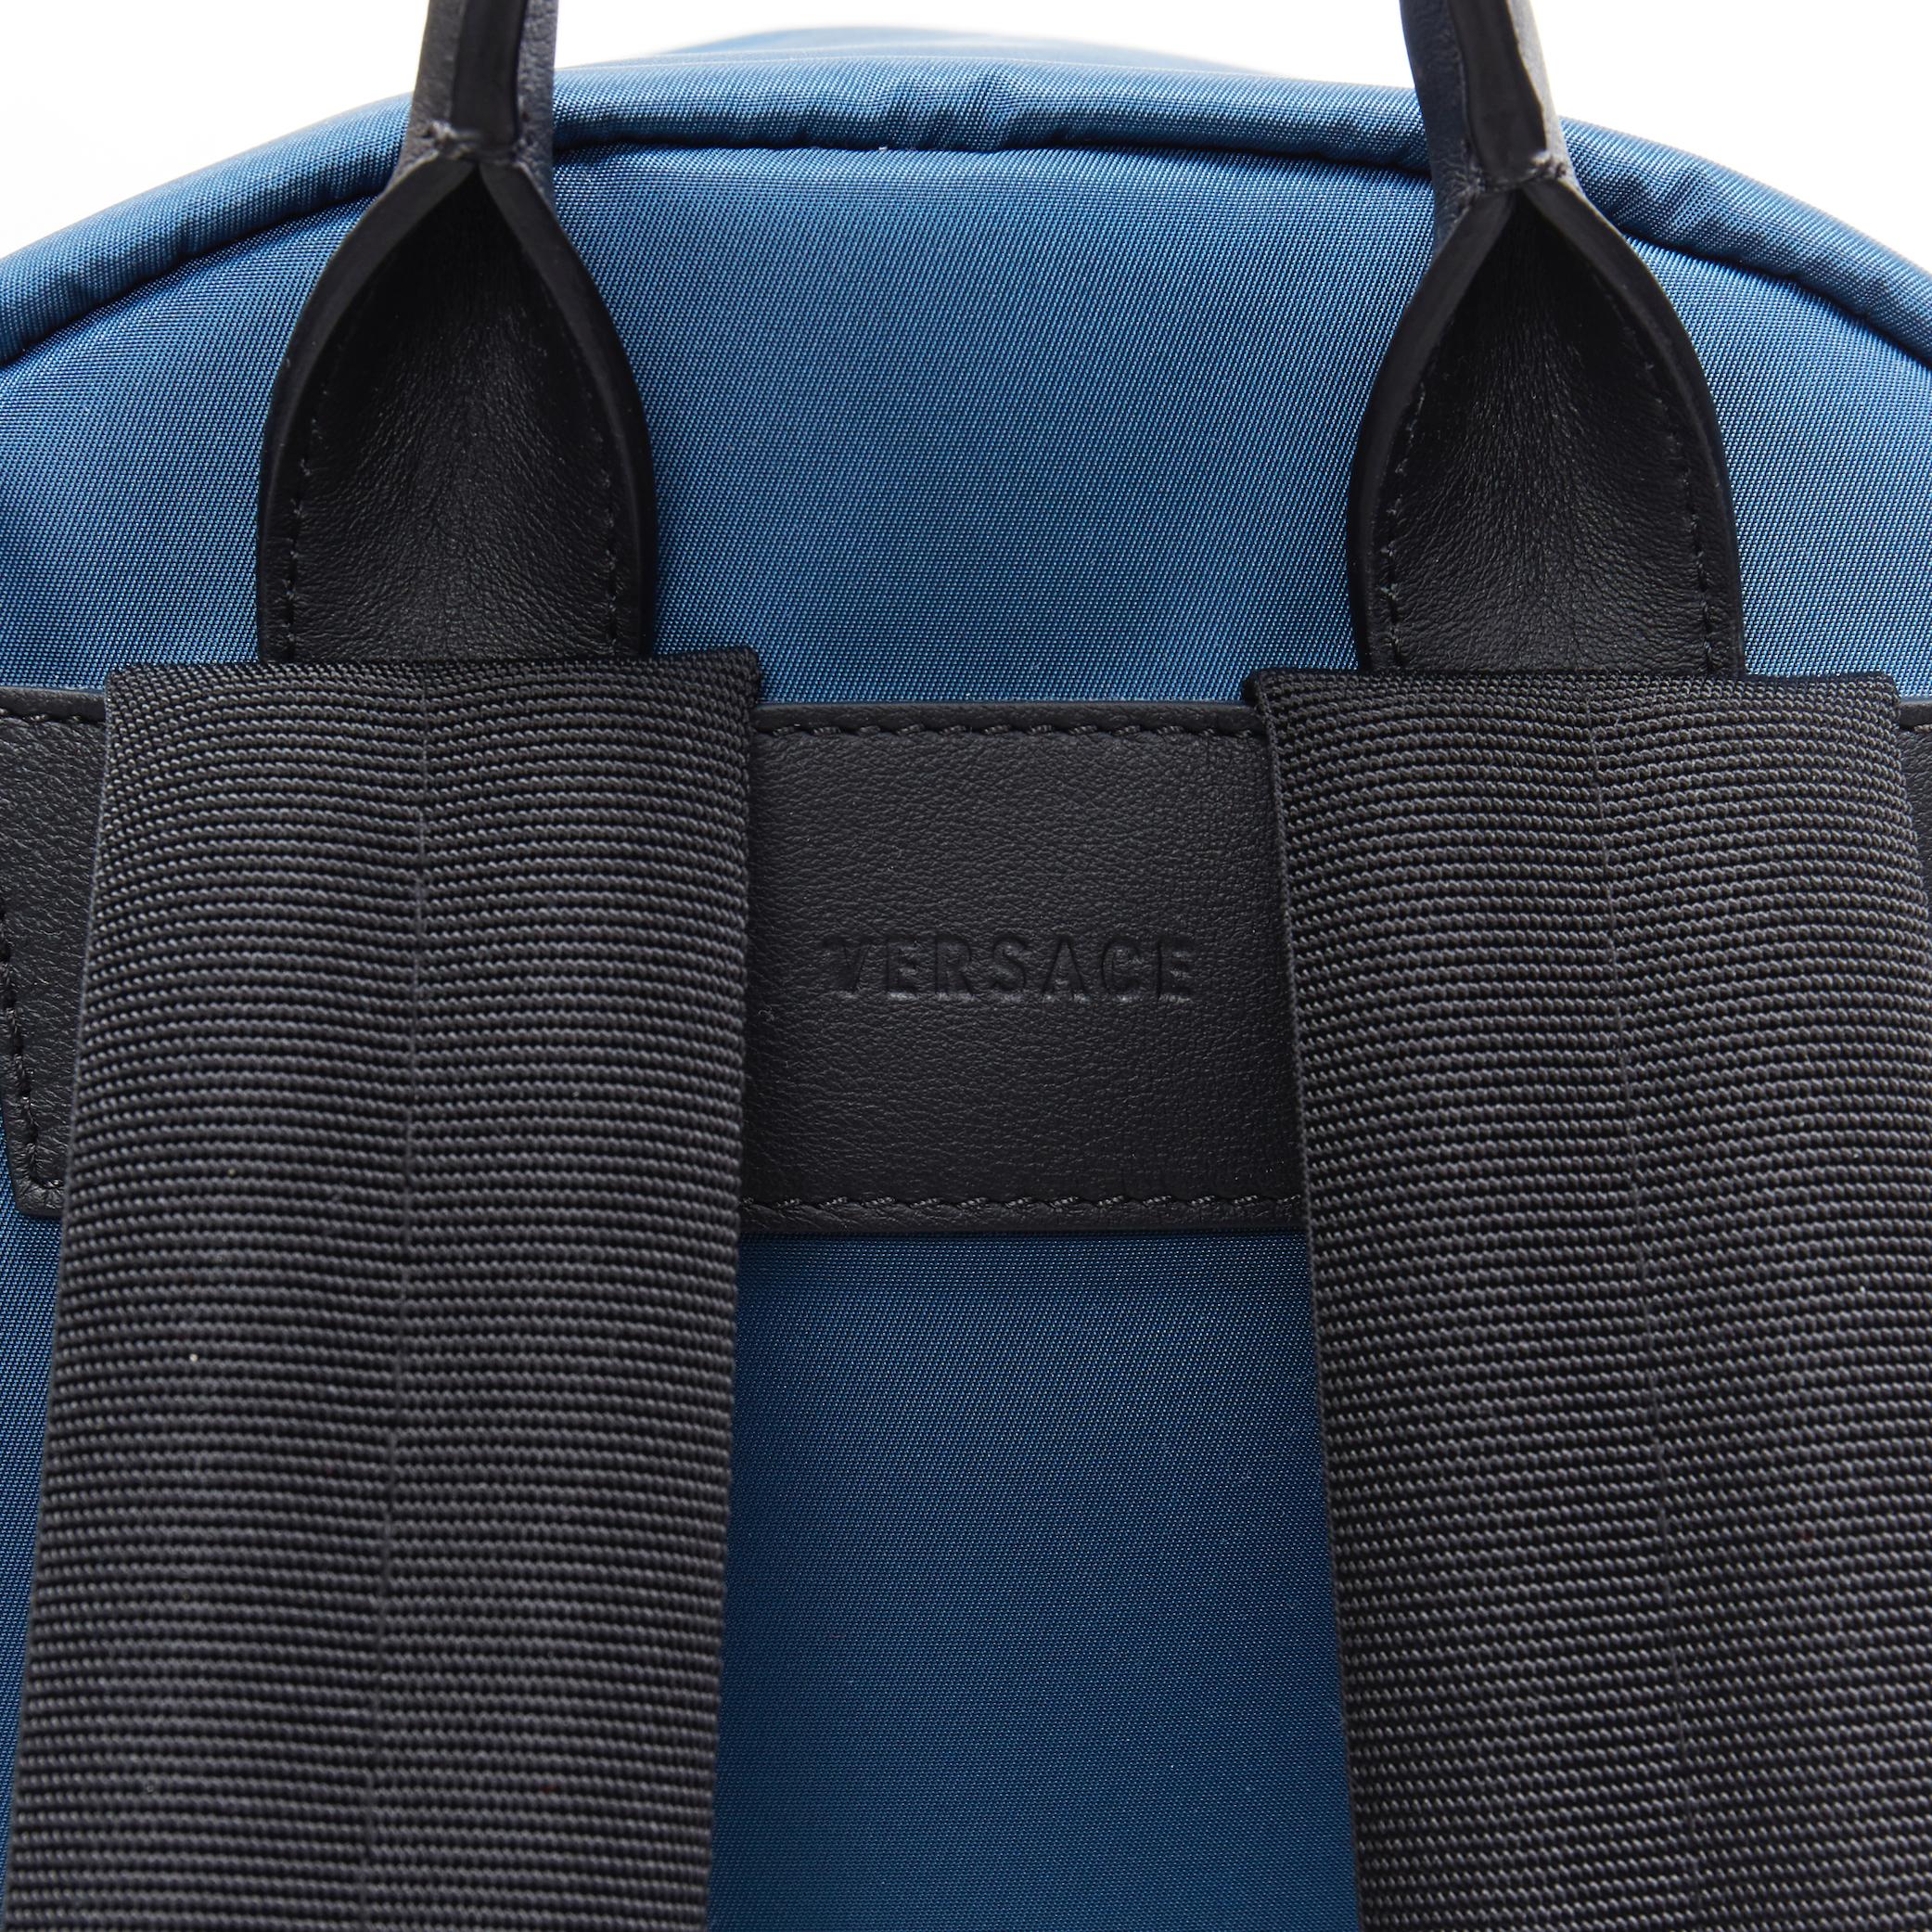 new VERSACE navy blue Palazzo Medusa Greca nylon stitching pocket backpack bag 6